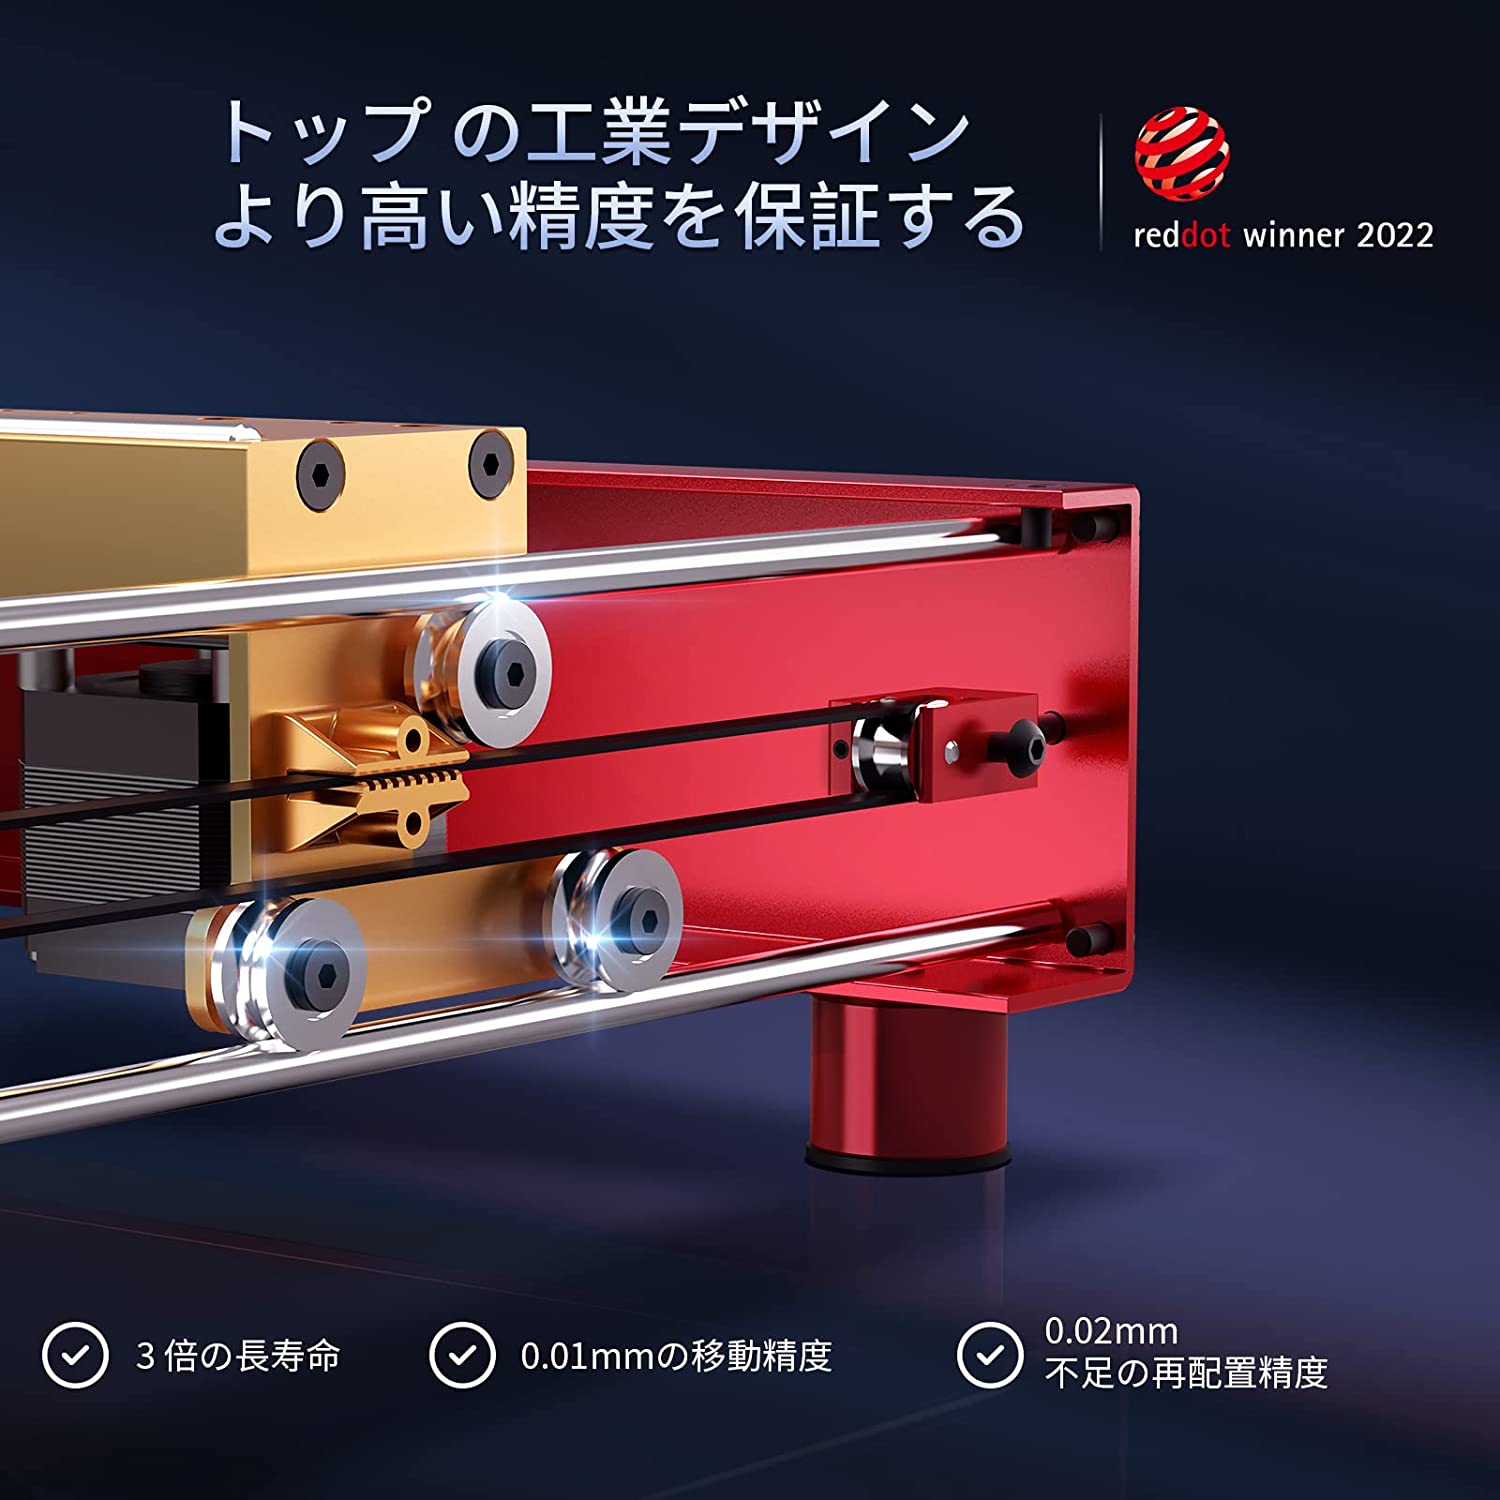 xTool D1 Pro レーザー彫刻機 5Wレーザー高出力 日本語対応